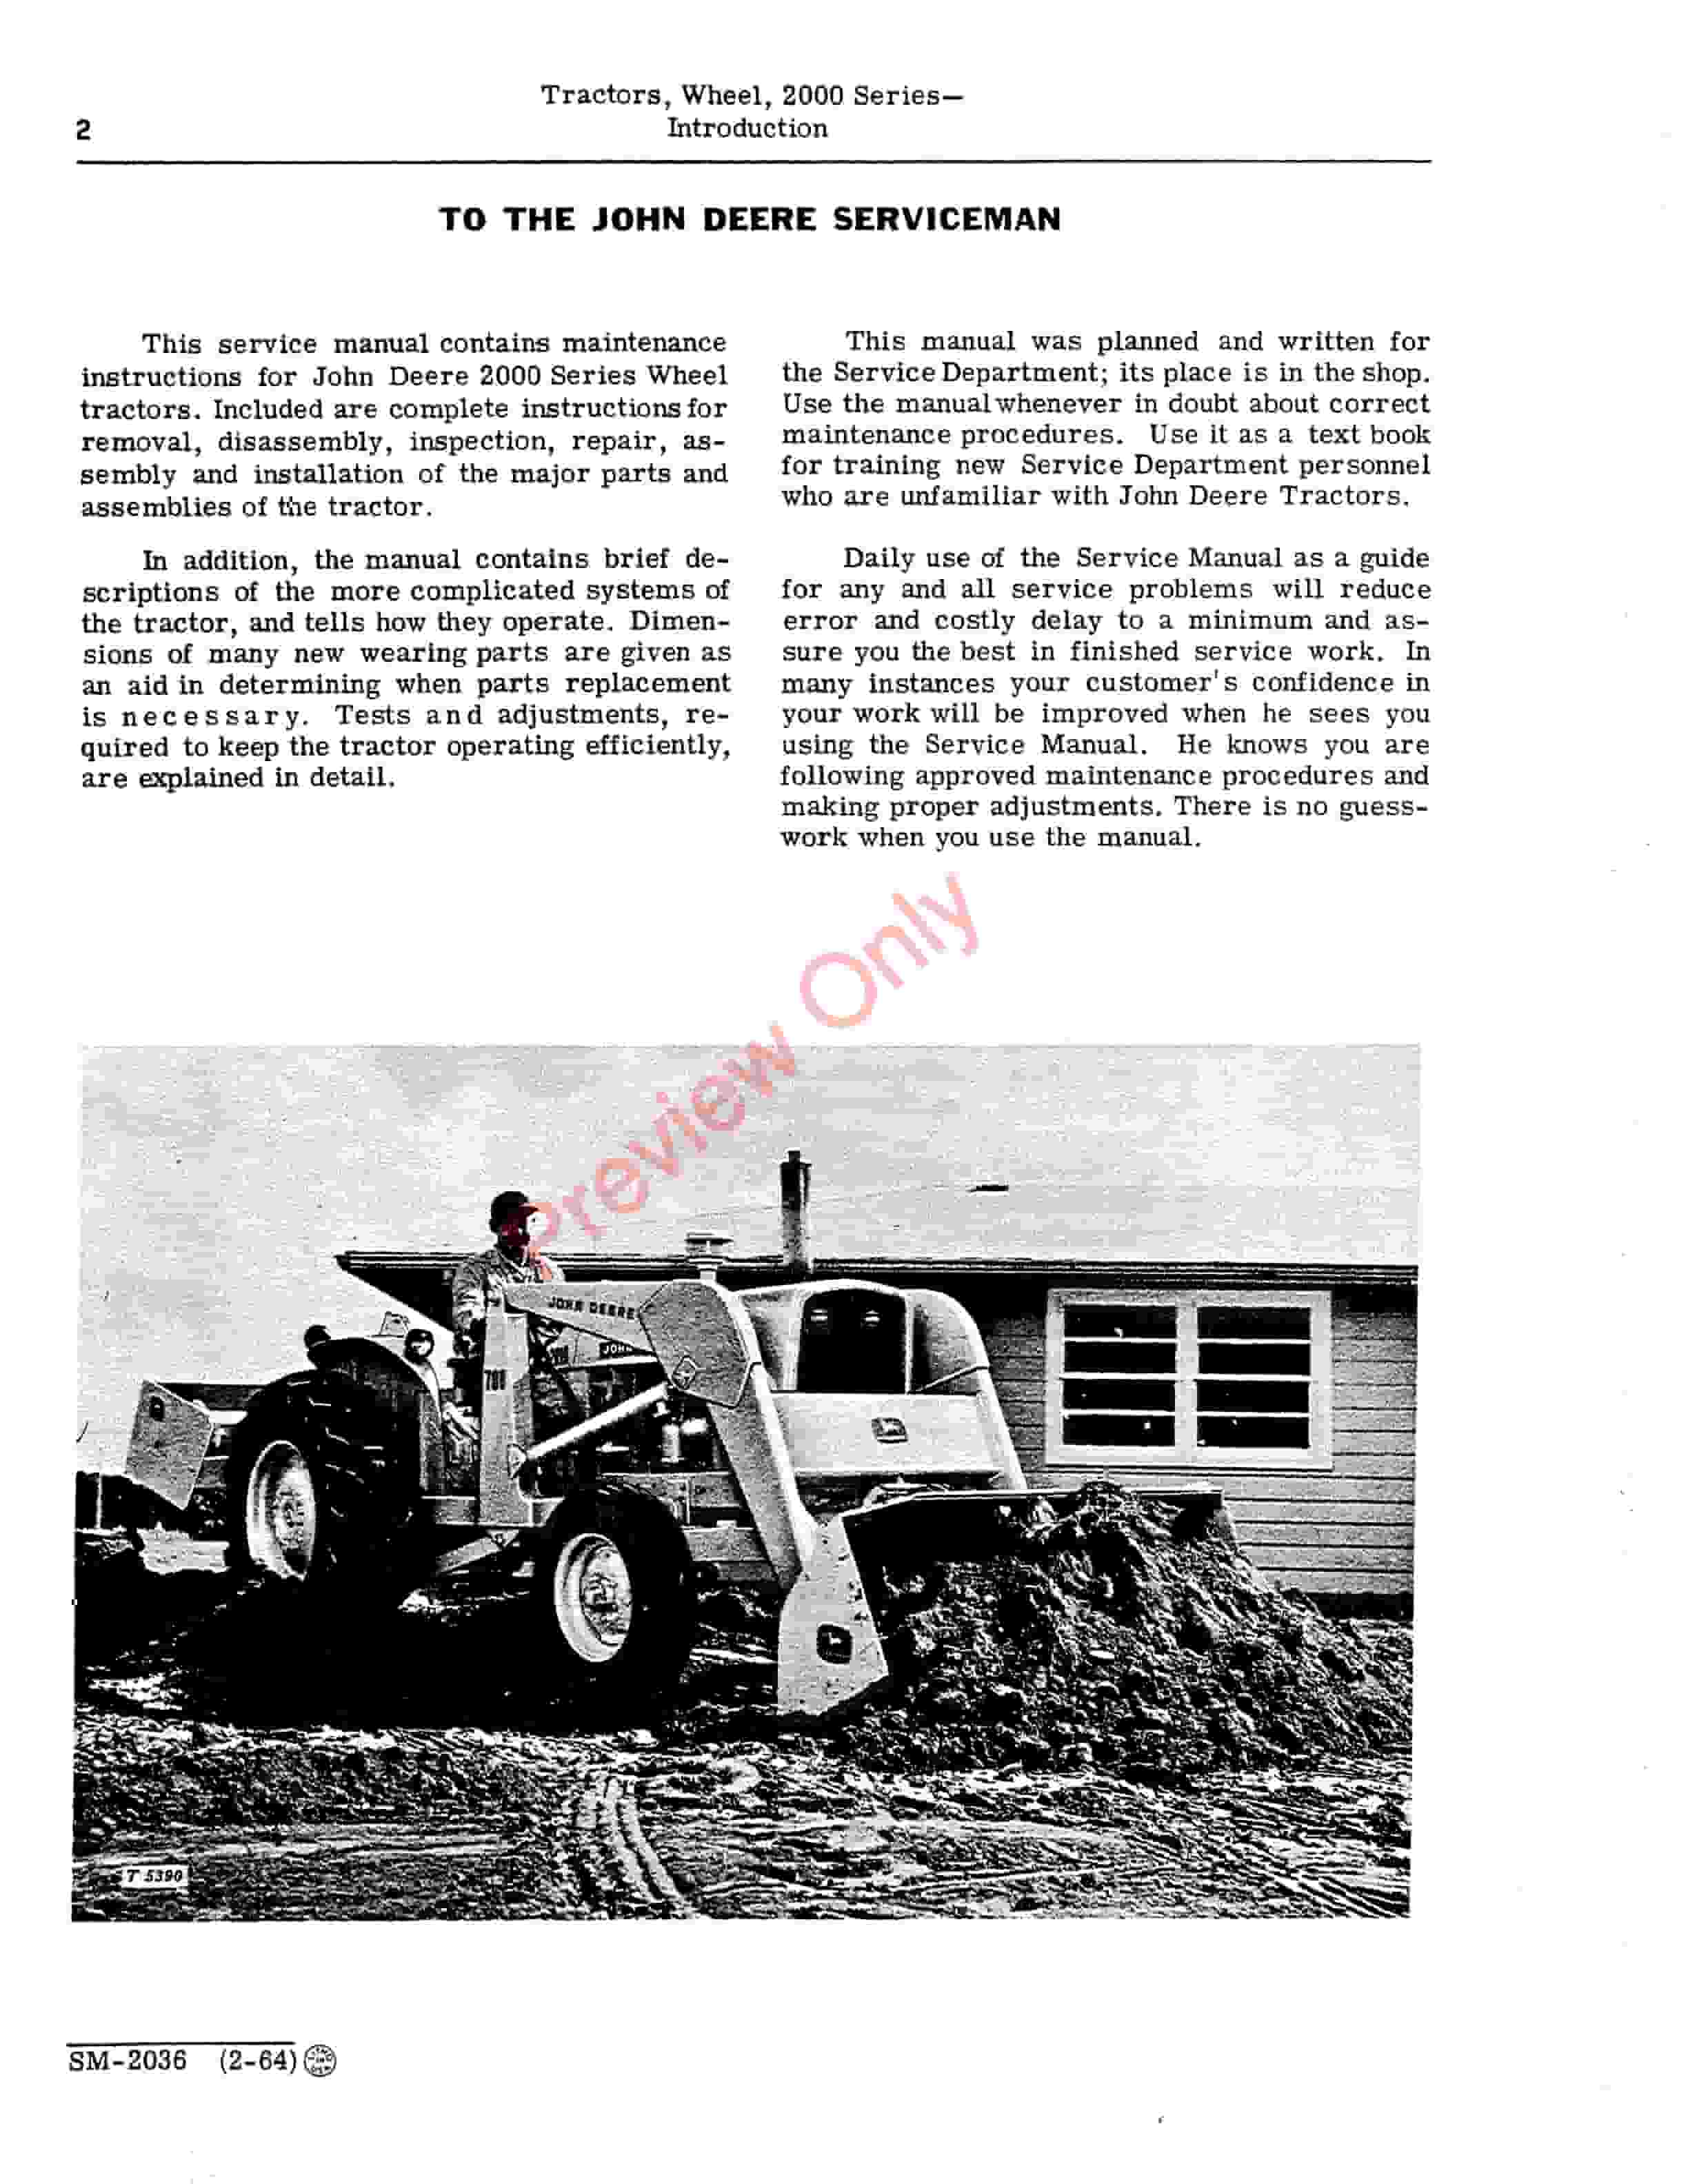 John Deere 2000 Series Tractors GasDiesel Service Manual SM2036 01FEB66 4